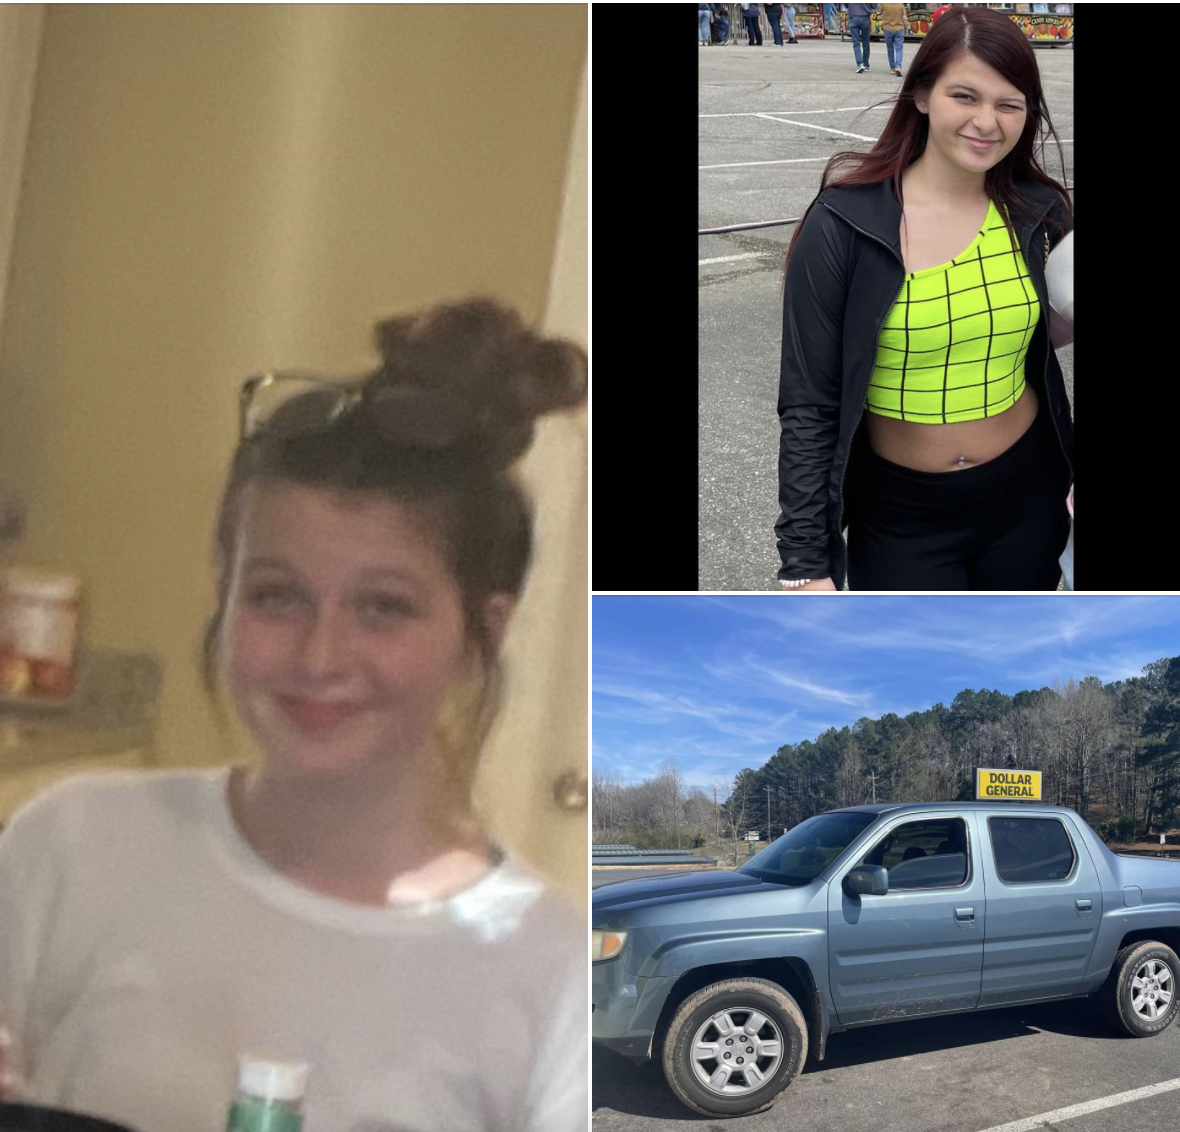 UPDATE: Missing Springville teen found safe